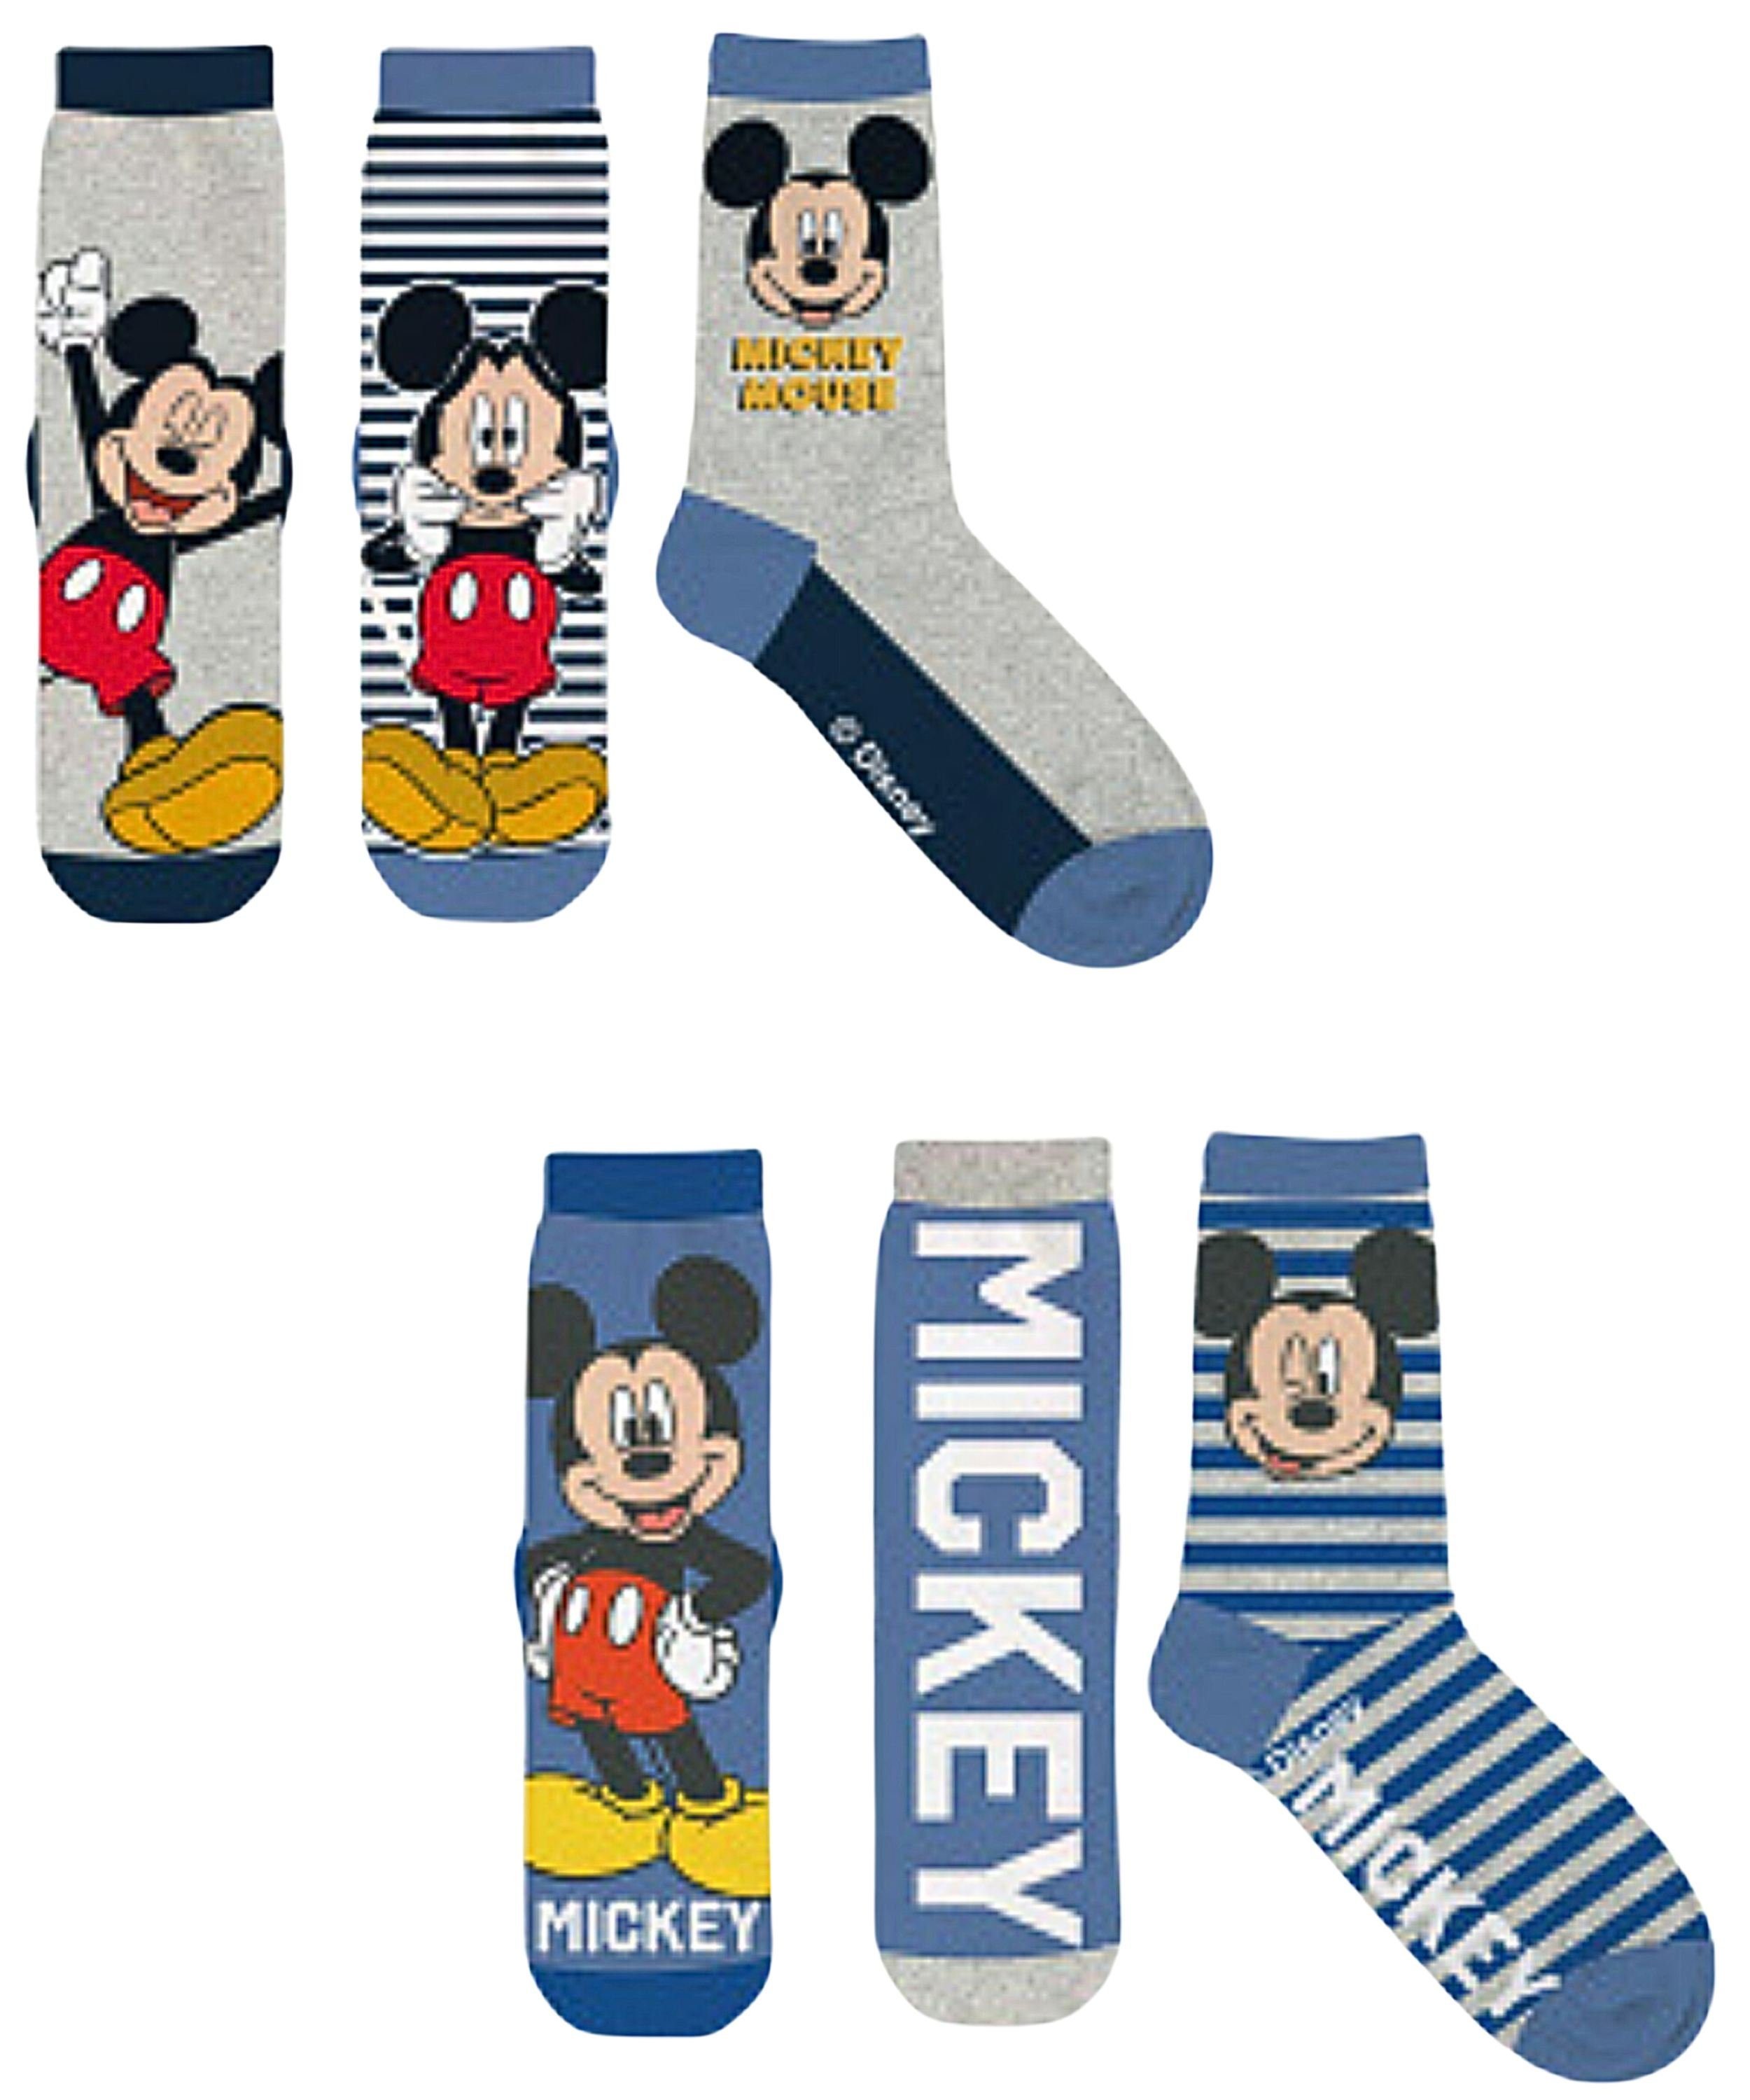 Disney Mickey Mouse Lange Jungen Mickey 23-34 (6-Paar) für Gr. Socken Socken Maus